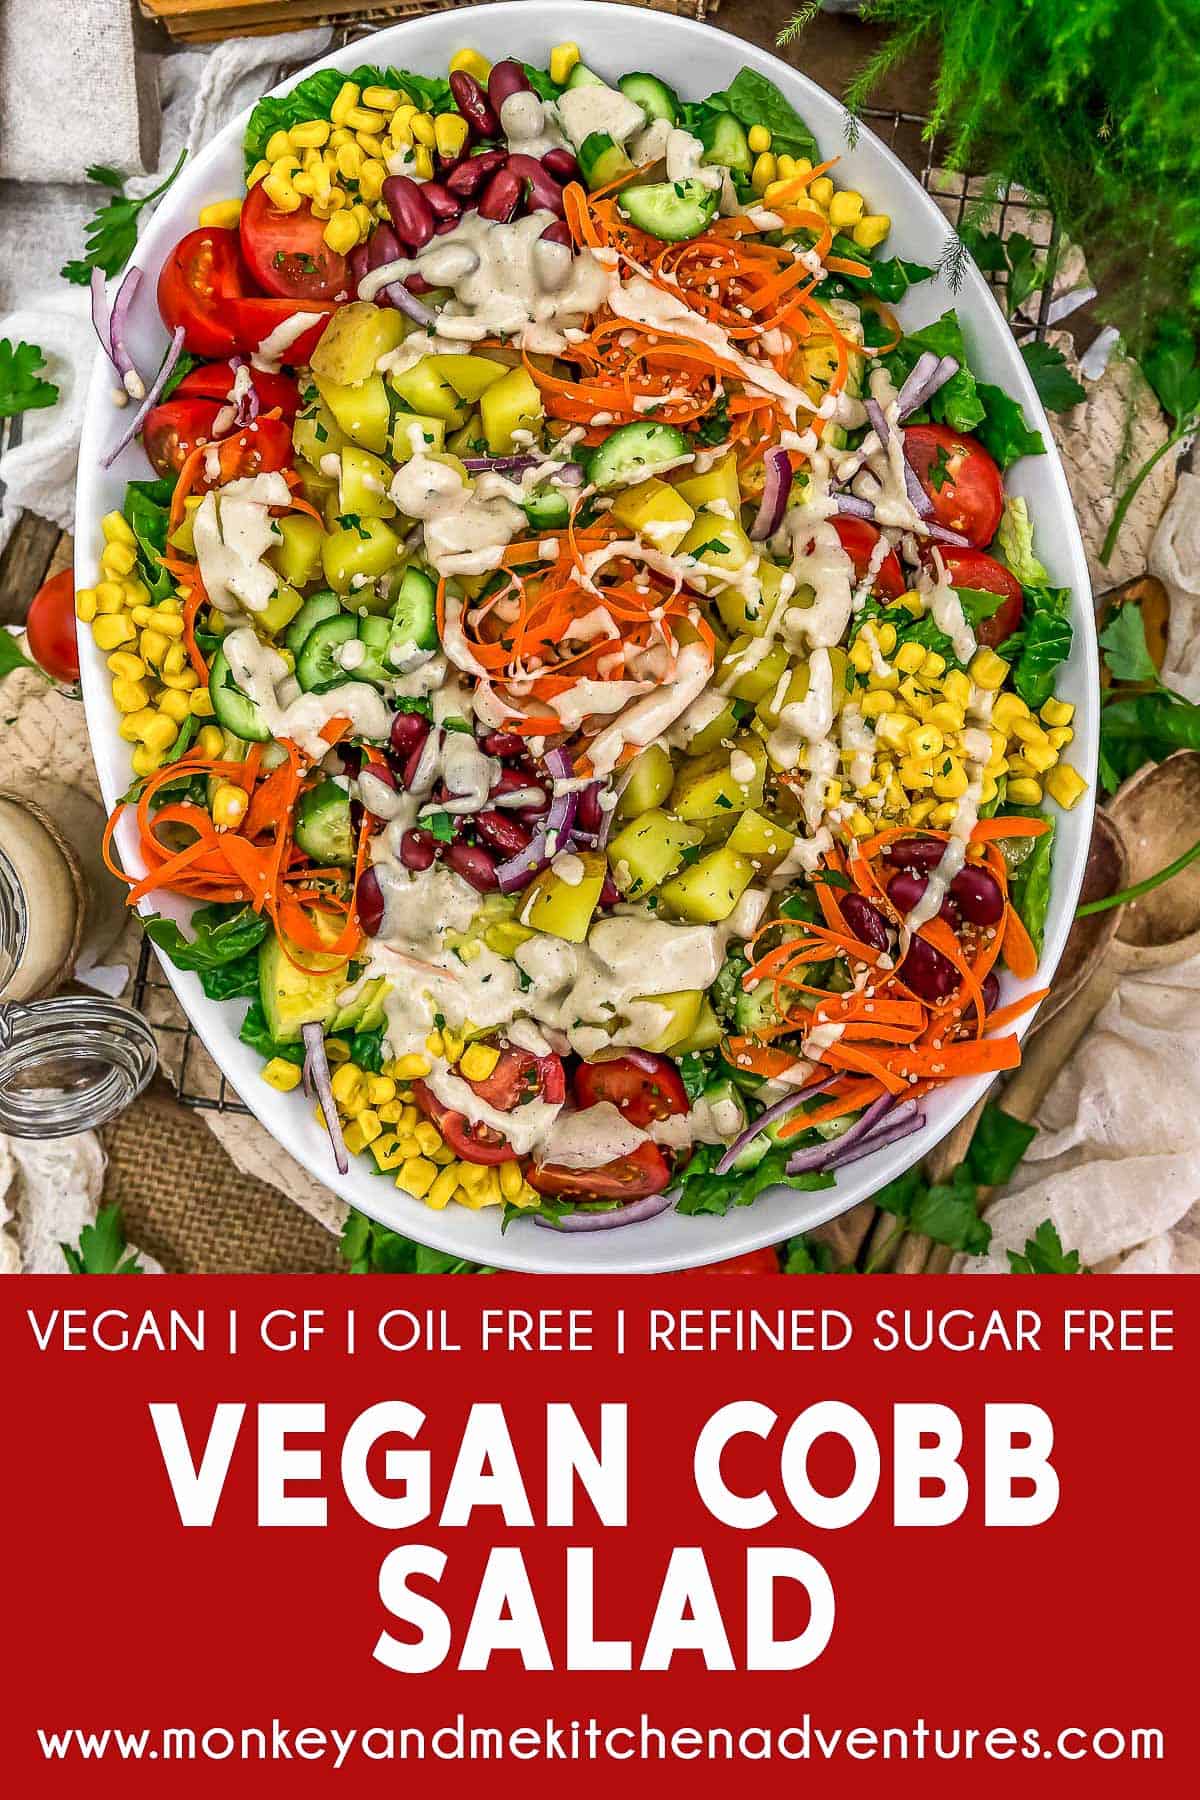 Vegan Cobb Salad with text description